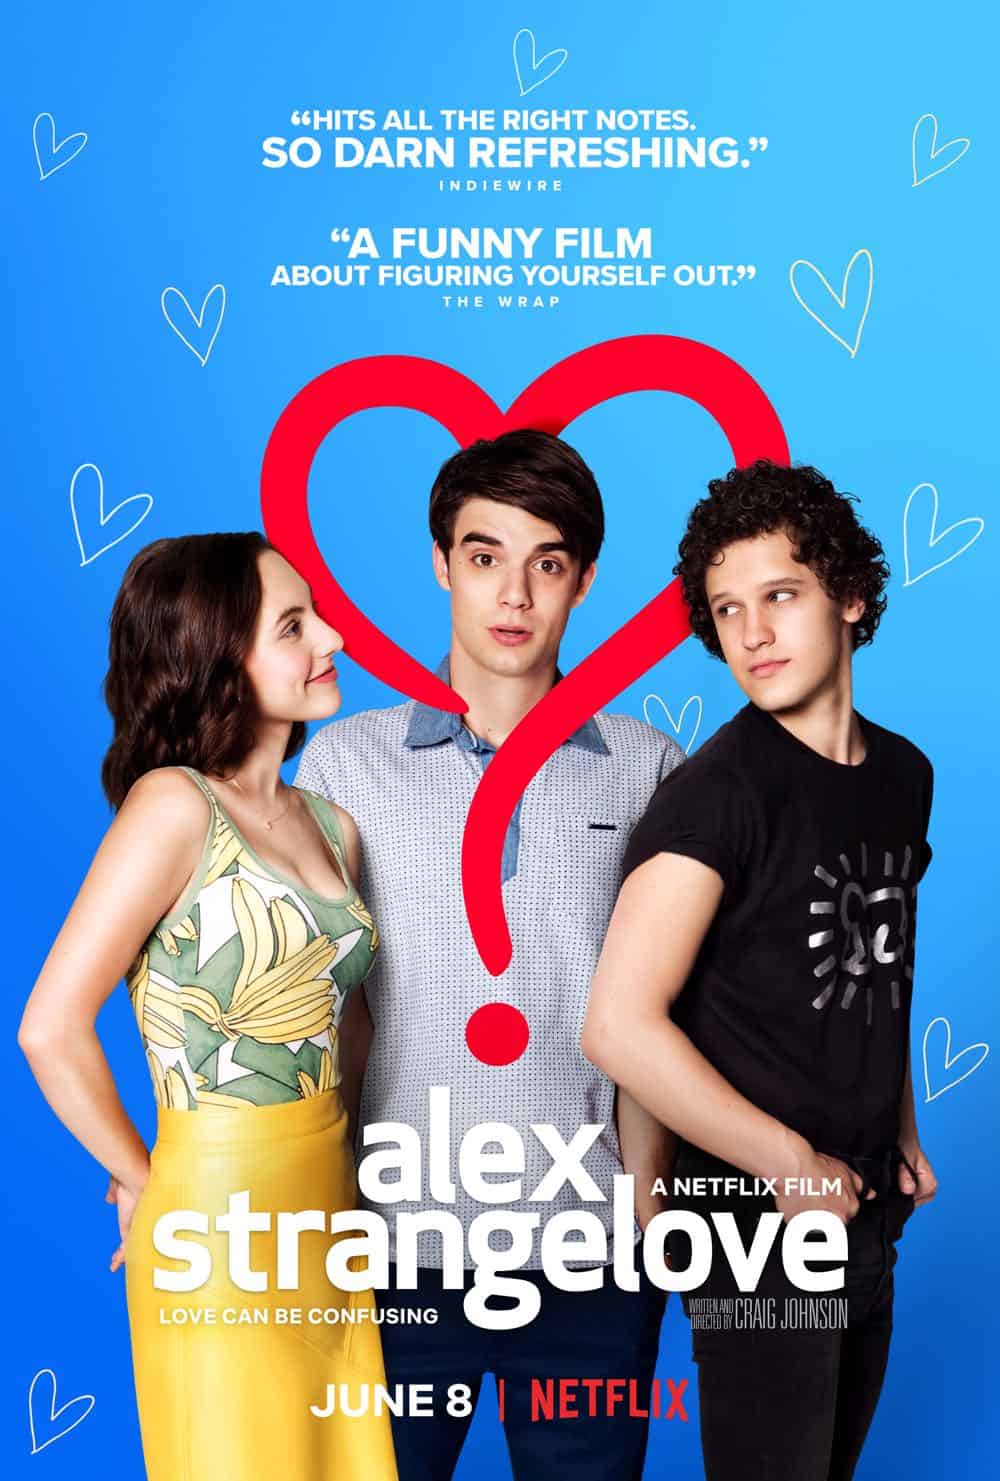 Alex-Strangelove-Poster-Key-Art-Netflix-Movie.jpg